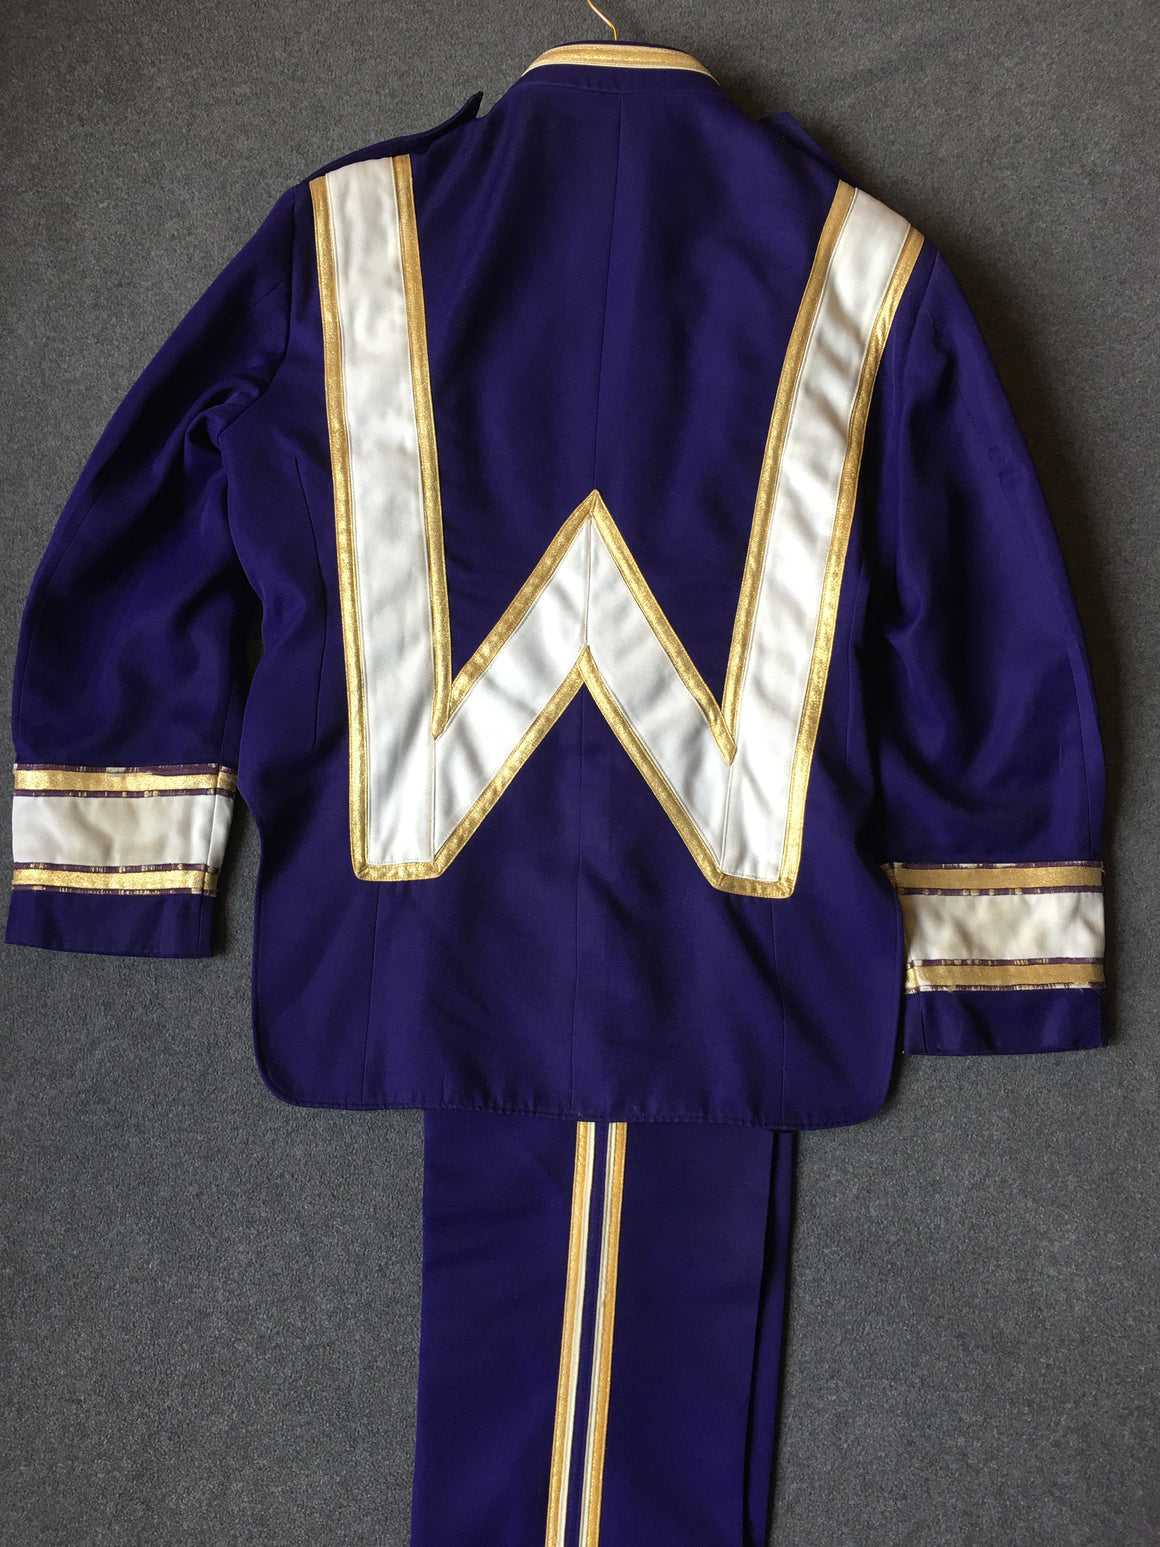 Vintage Washington Huskies band uniform - L / XL